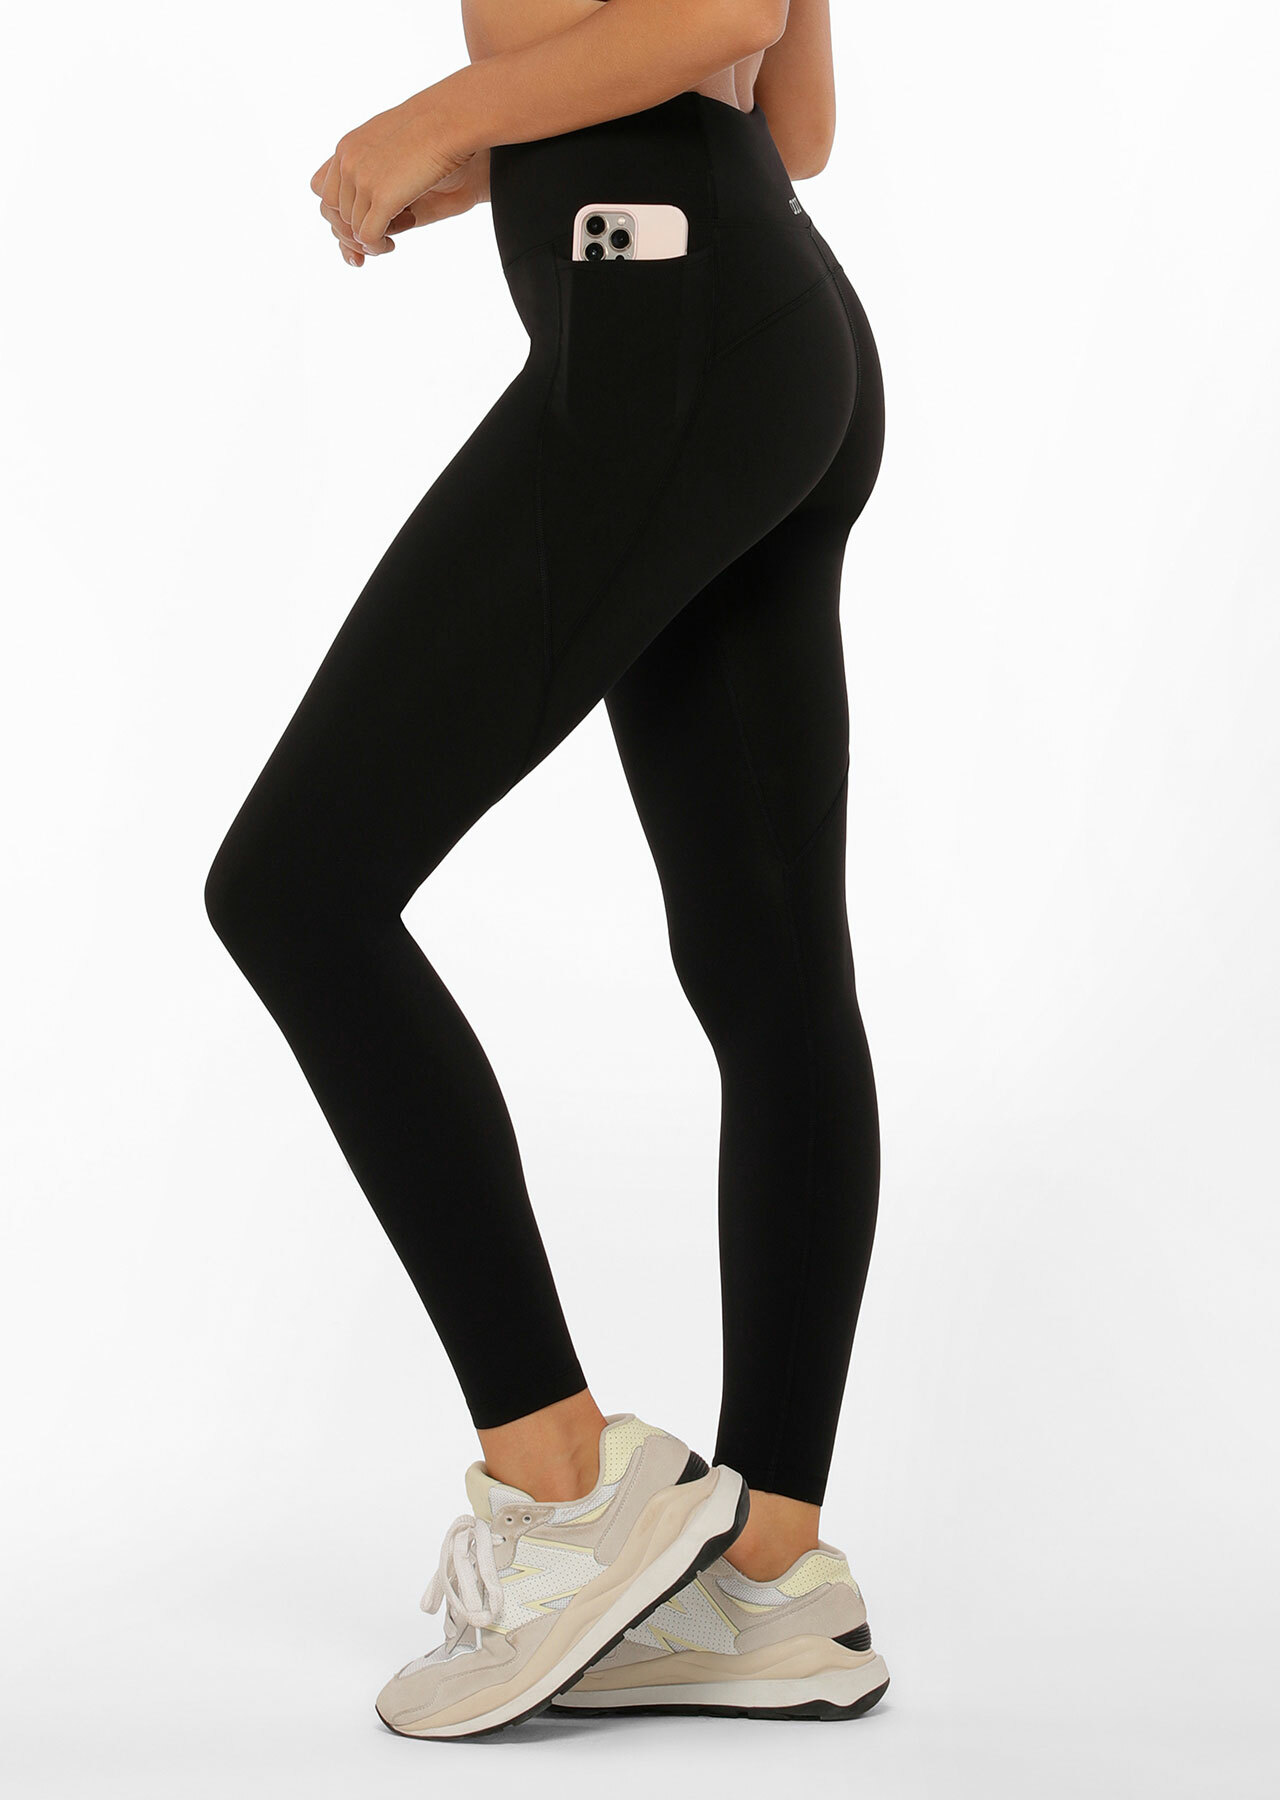 Nike Dri-Fit 3/4 Leggings Workout Pants, Women's Fashion, Activewear on  Carousell